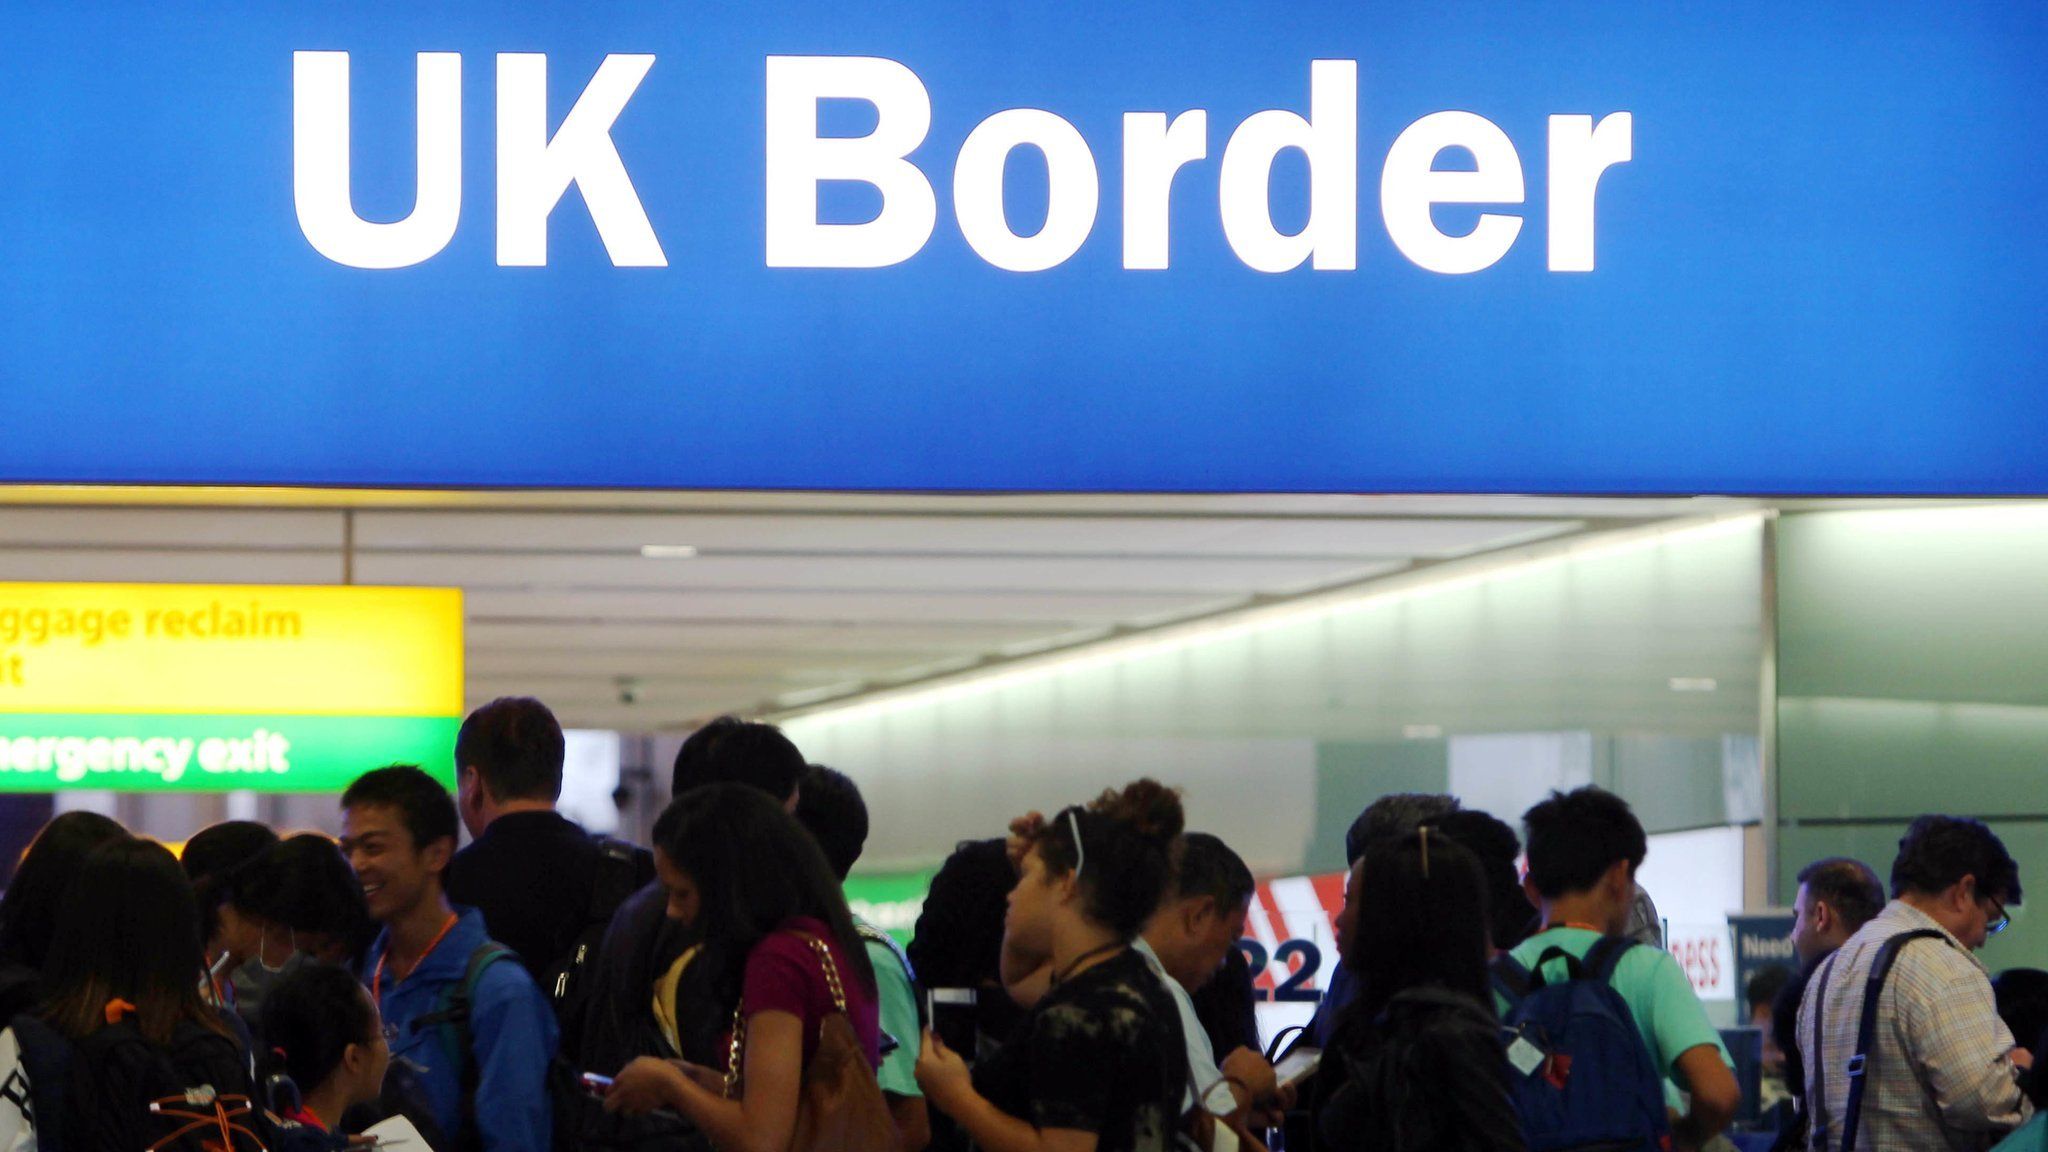 Border checks at Heathrow Airport